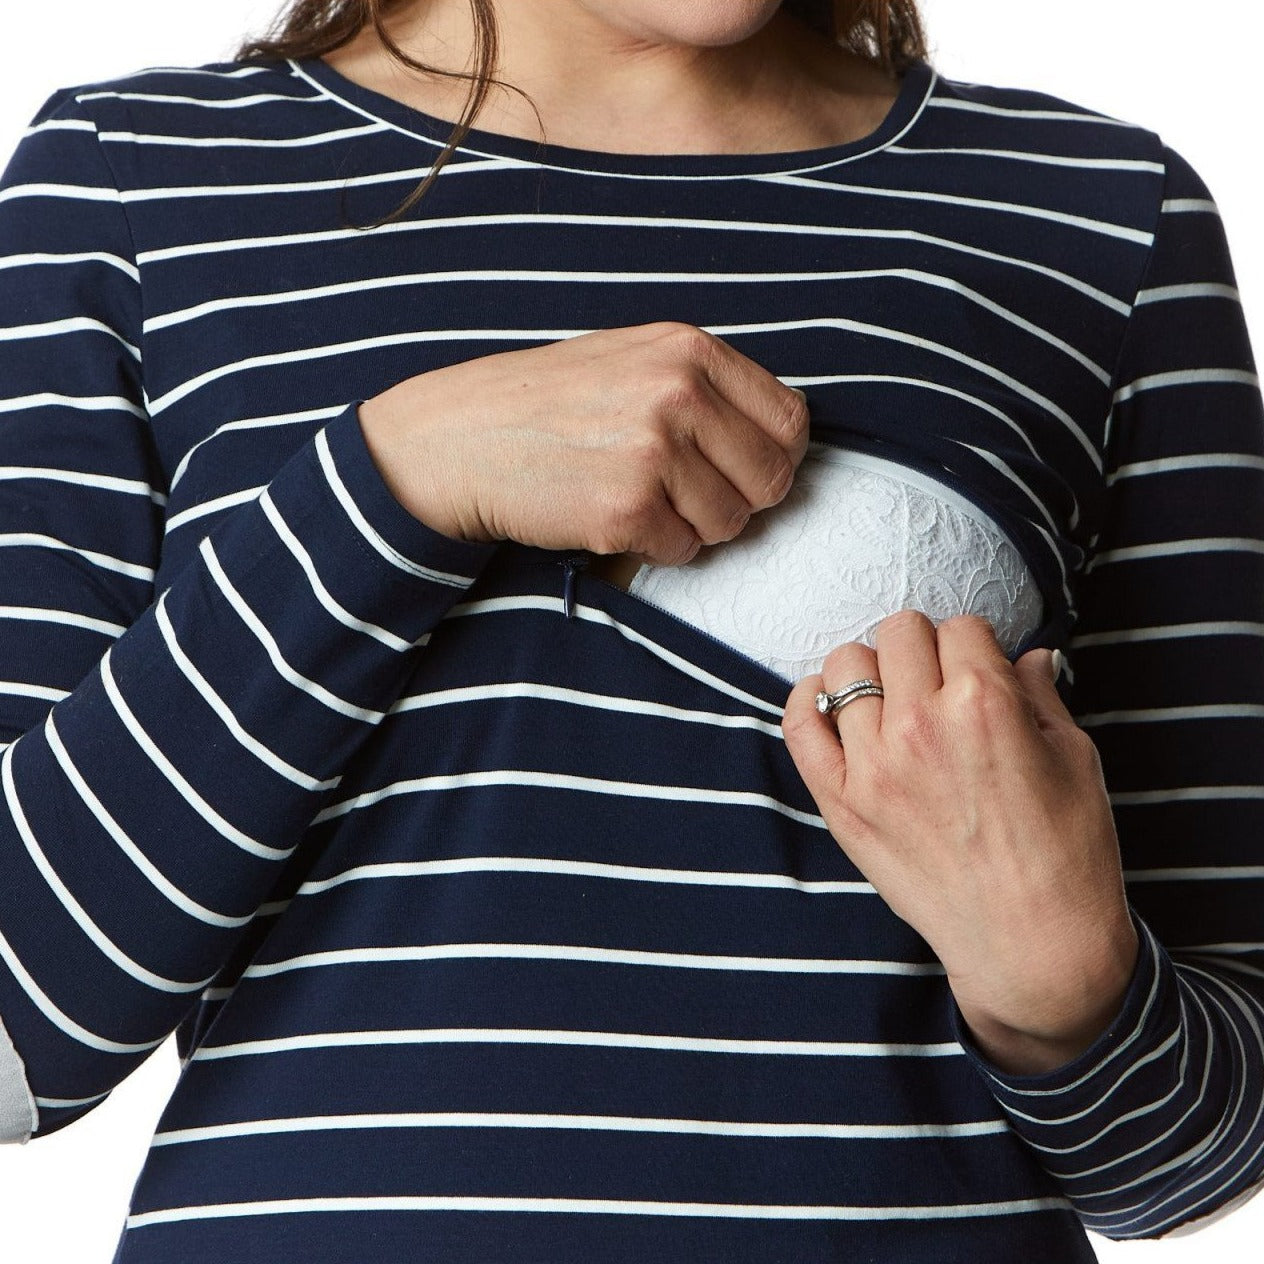 The Juno - Long Sleeve Breastfeeding Mumma Top